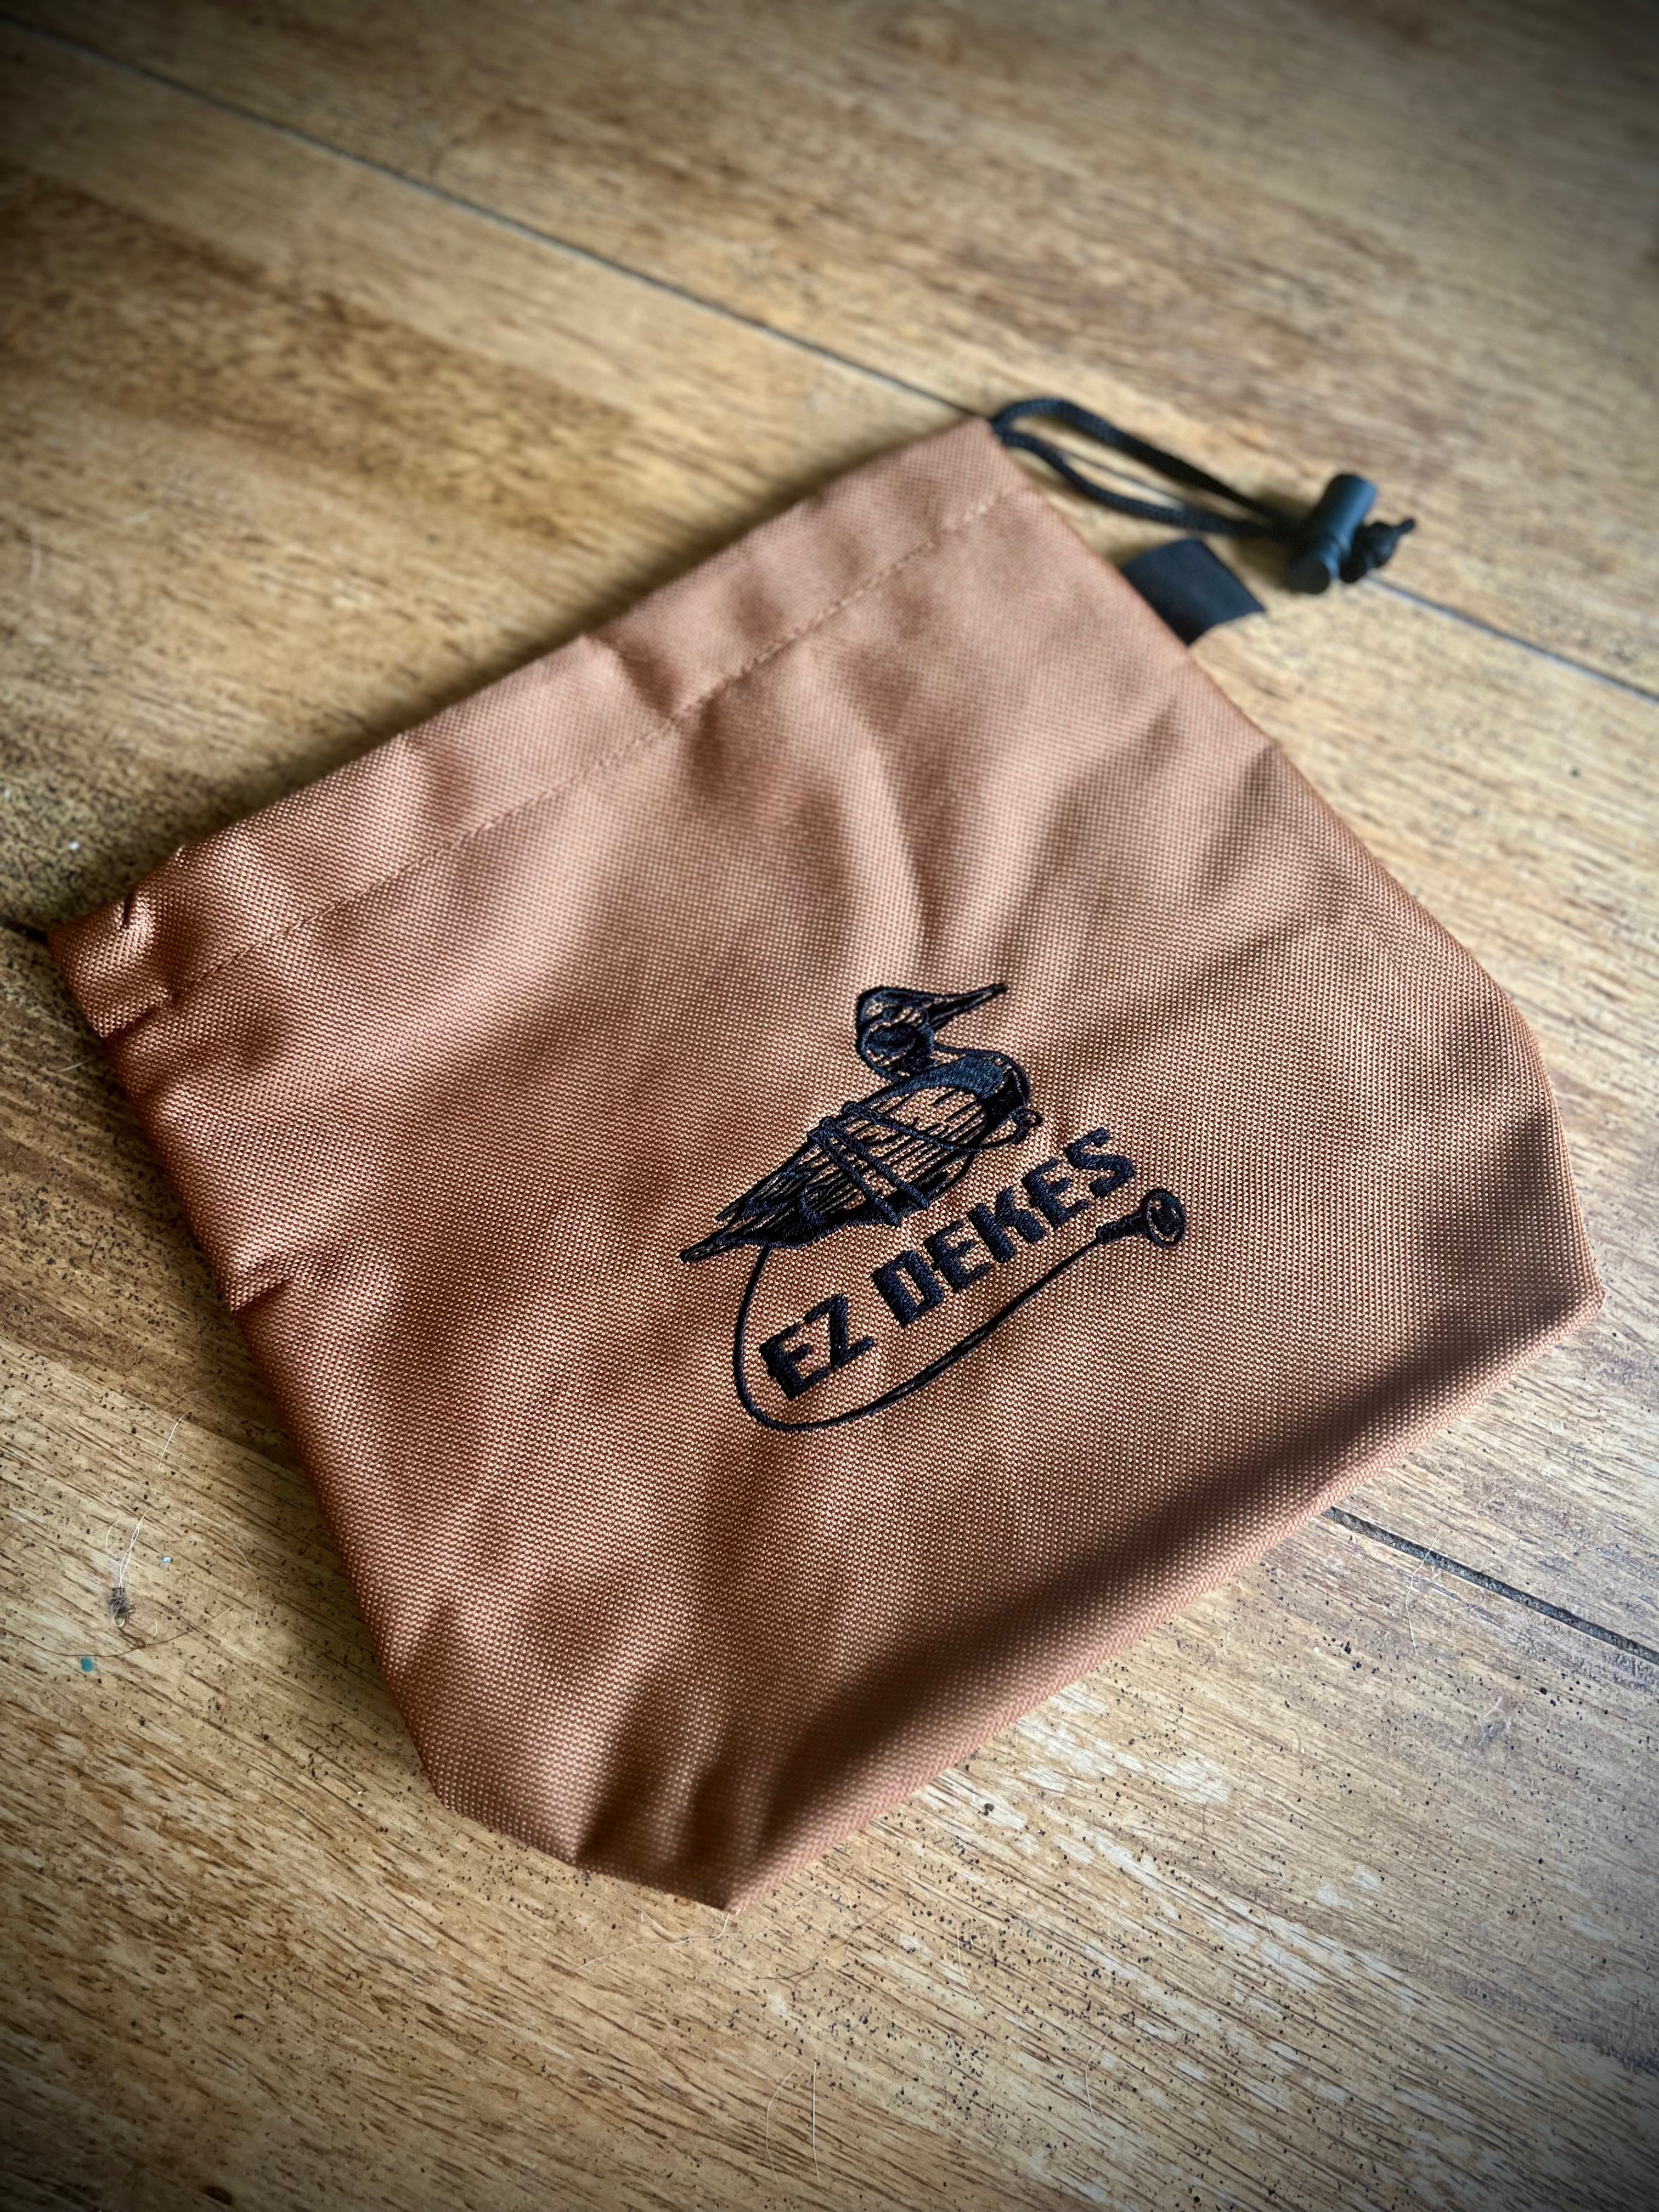 EZ DEKES Jerk String Bag - Single Item